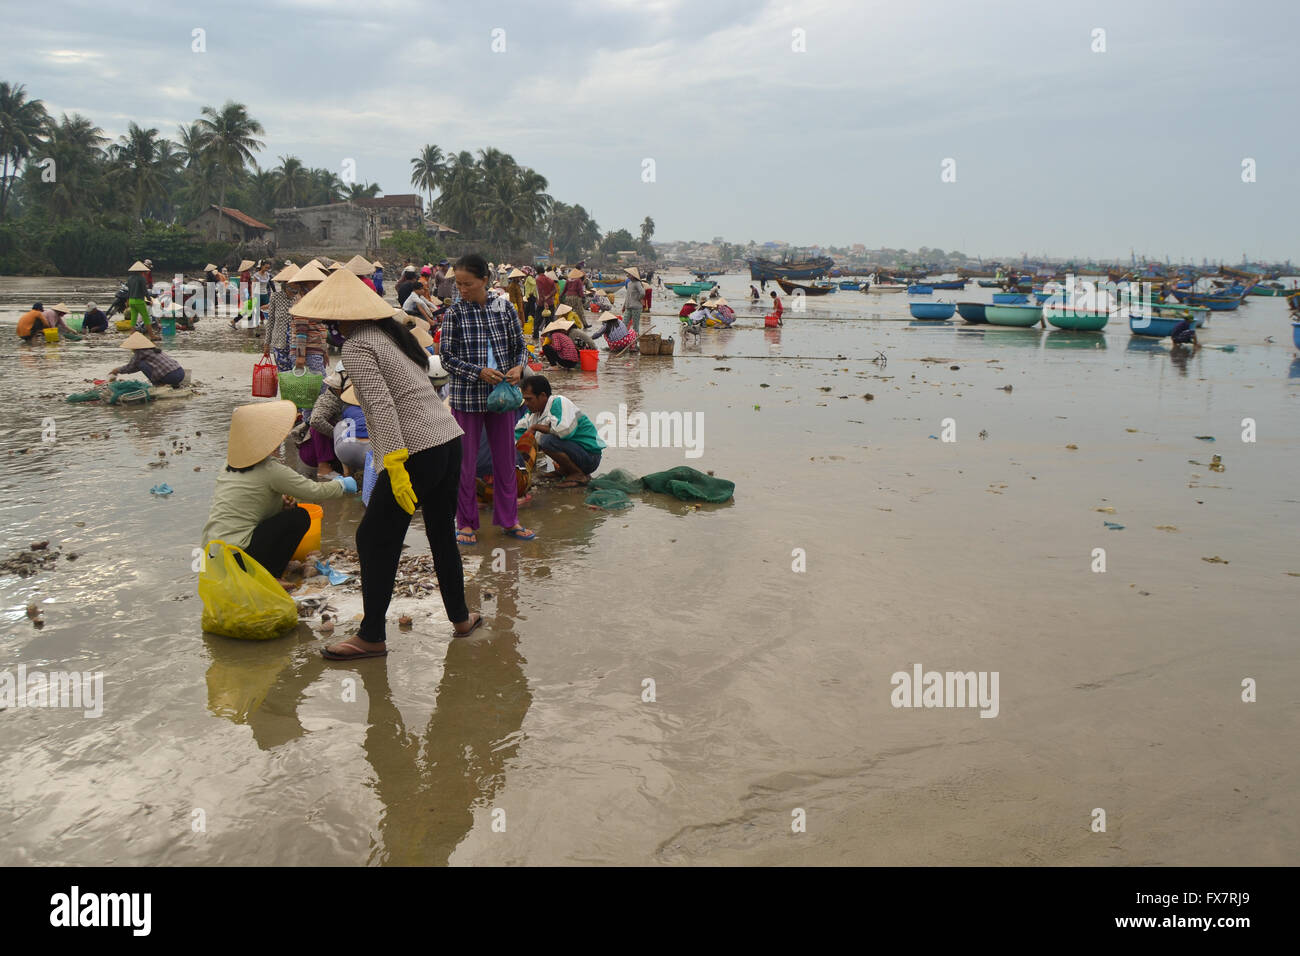 Vietnamese fishermen sort their catch and sell fish on the beach, Vietnam Stock Photo